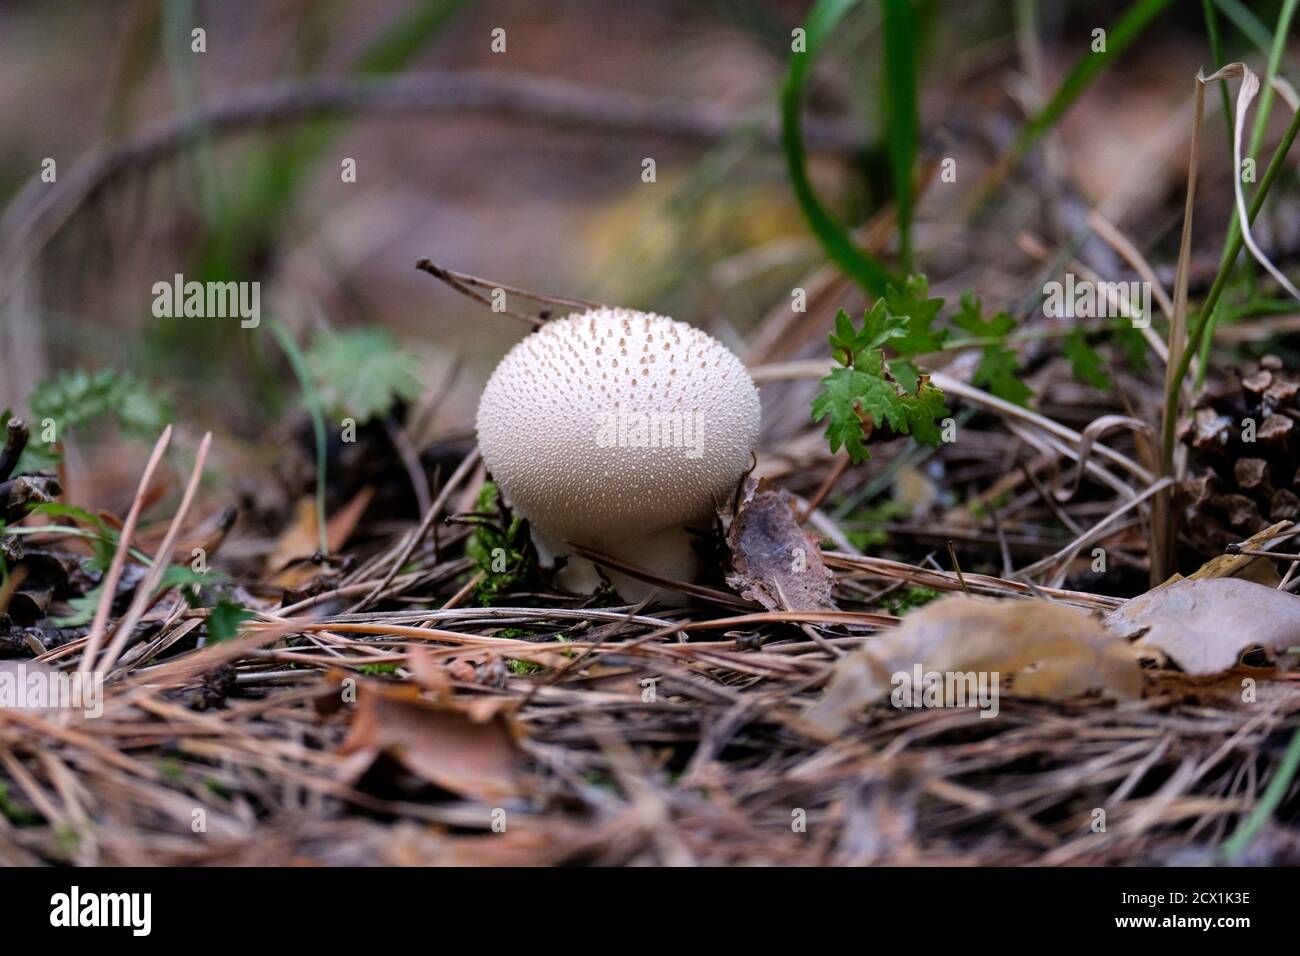 White round mushroom grows in the forest. Dark photo, blurred background. Stock Photo